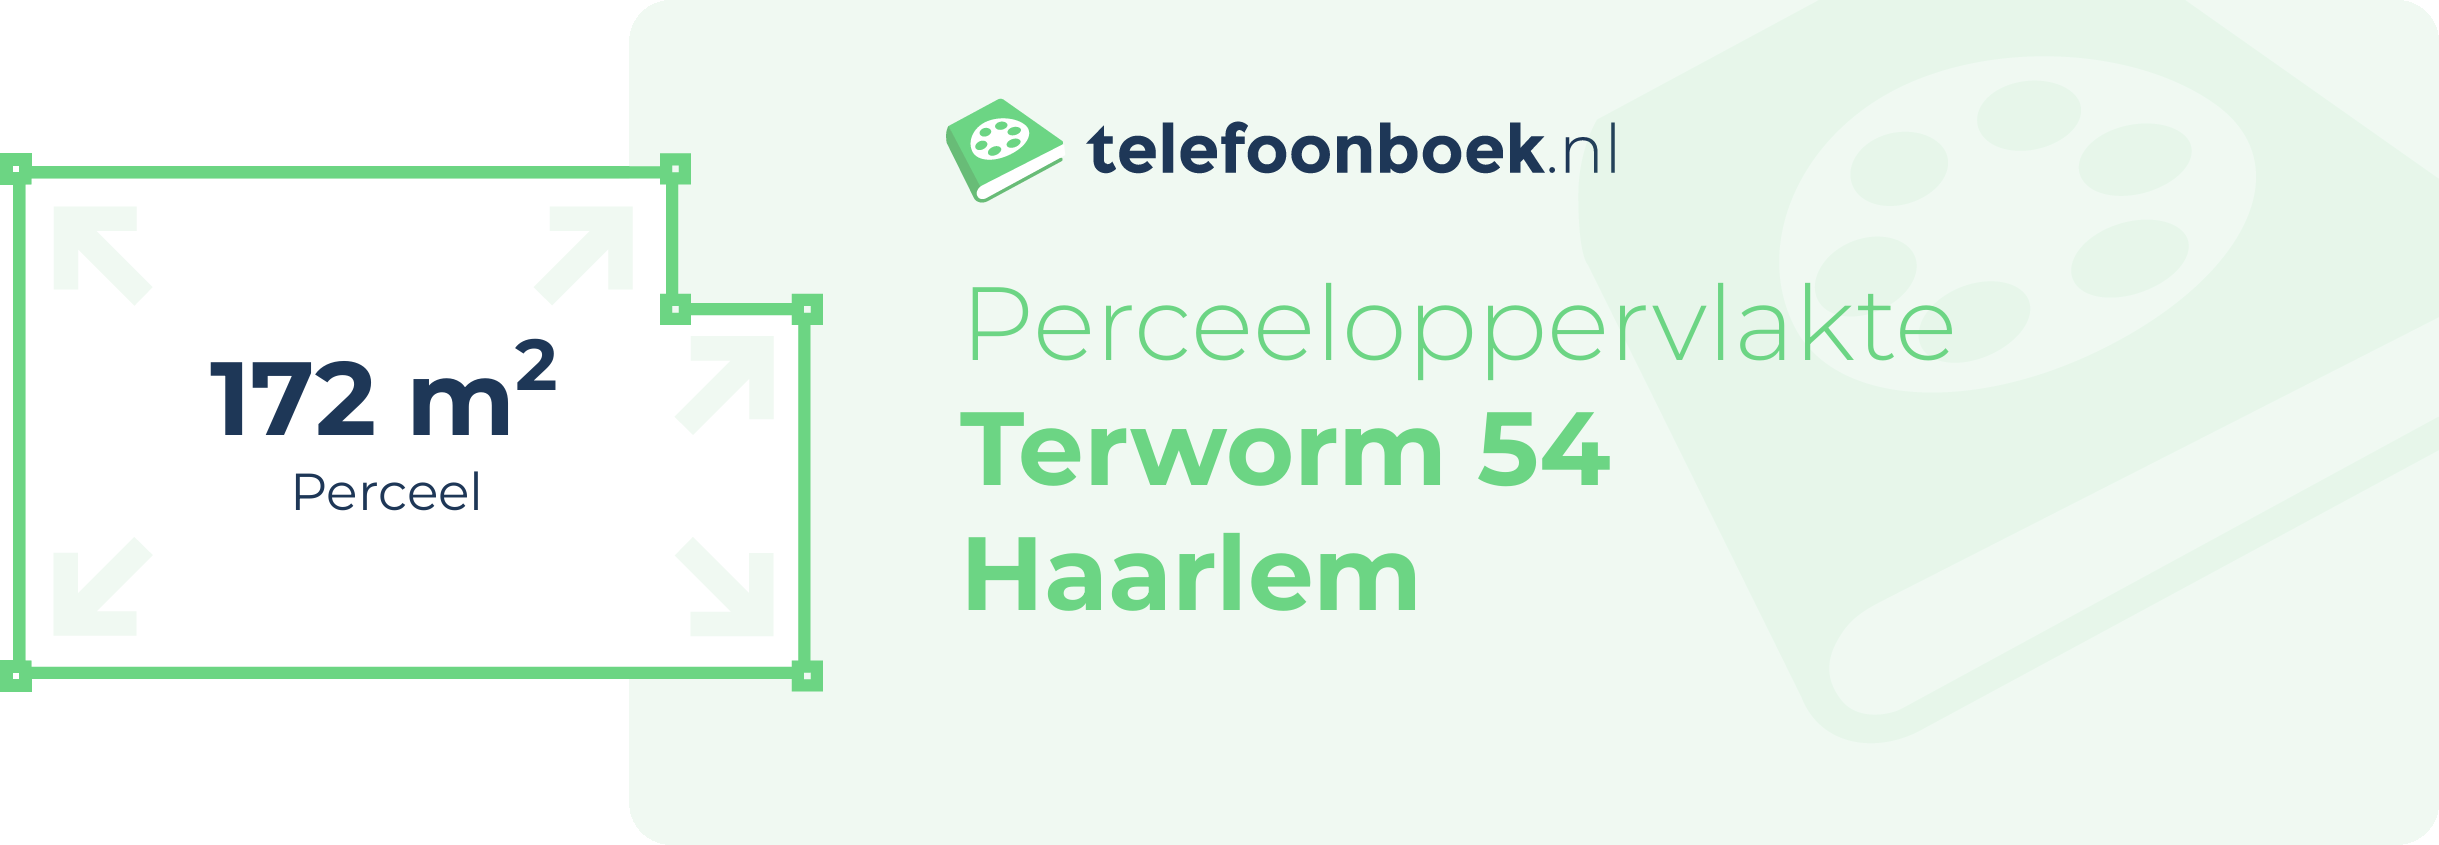 Perceeloppervlakte Terworm 54 Haarlem